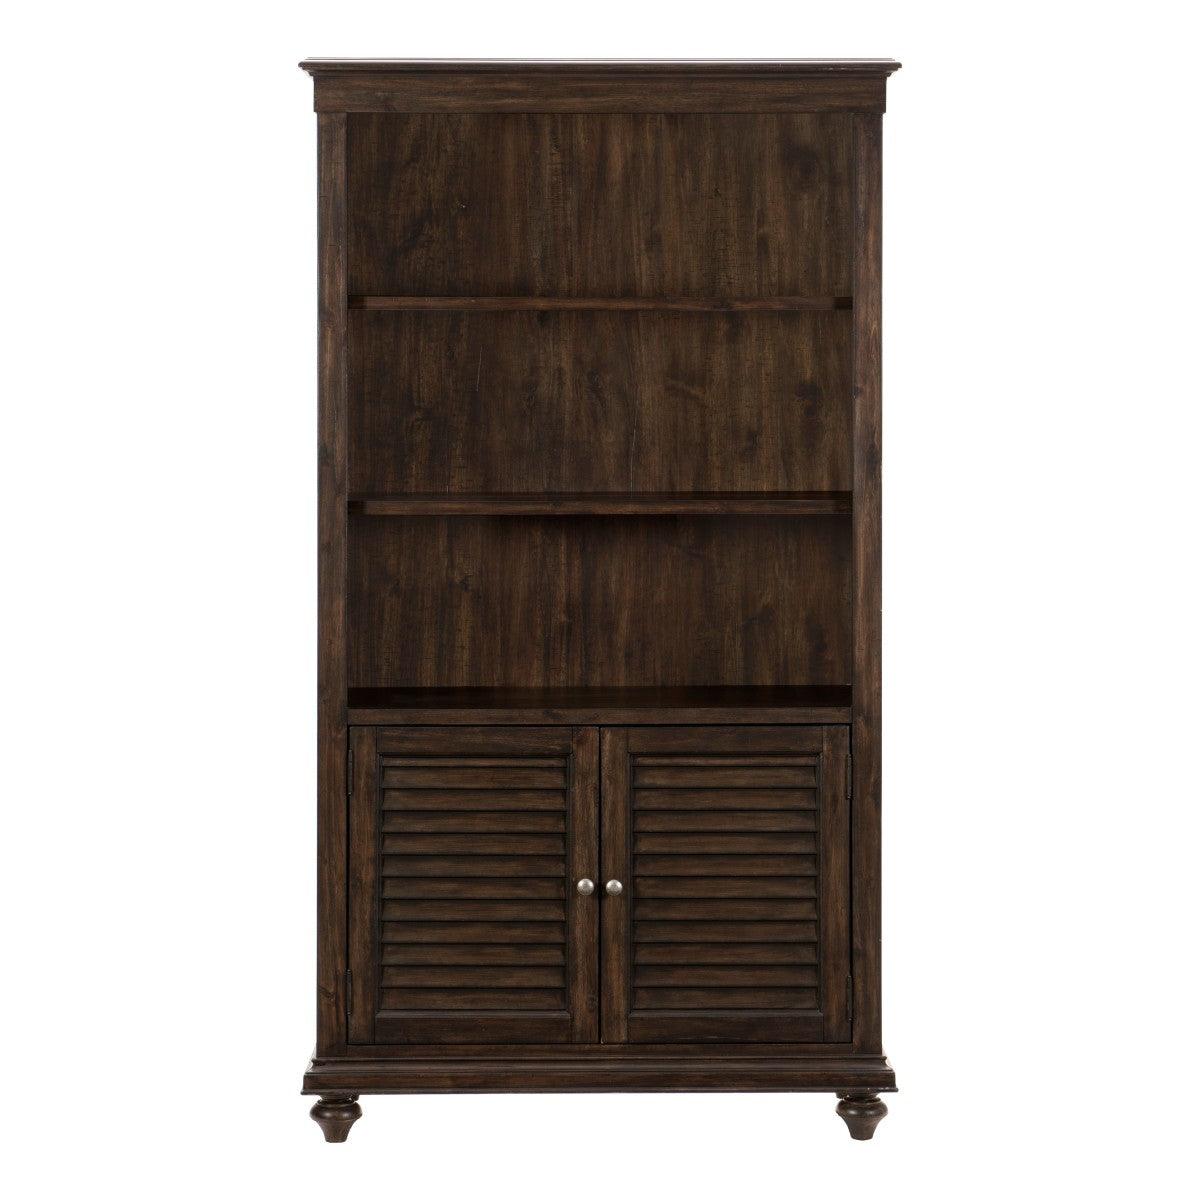 Cardano Driftwood Charcoal Acacia Veneer Wood And Engineered Wood Bookcase 3 Upper Open Shelves - Ella Furniture